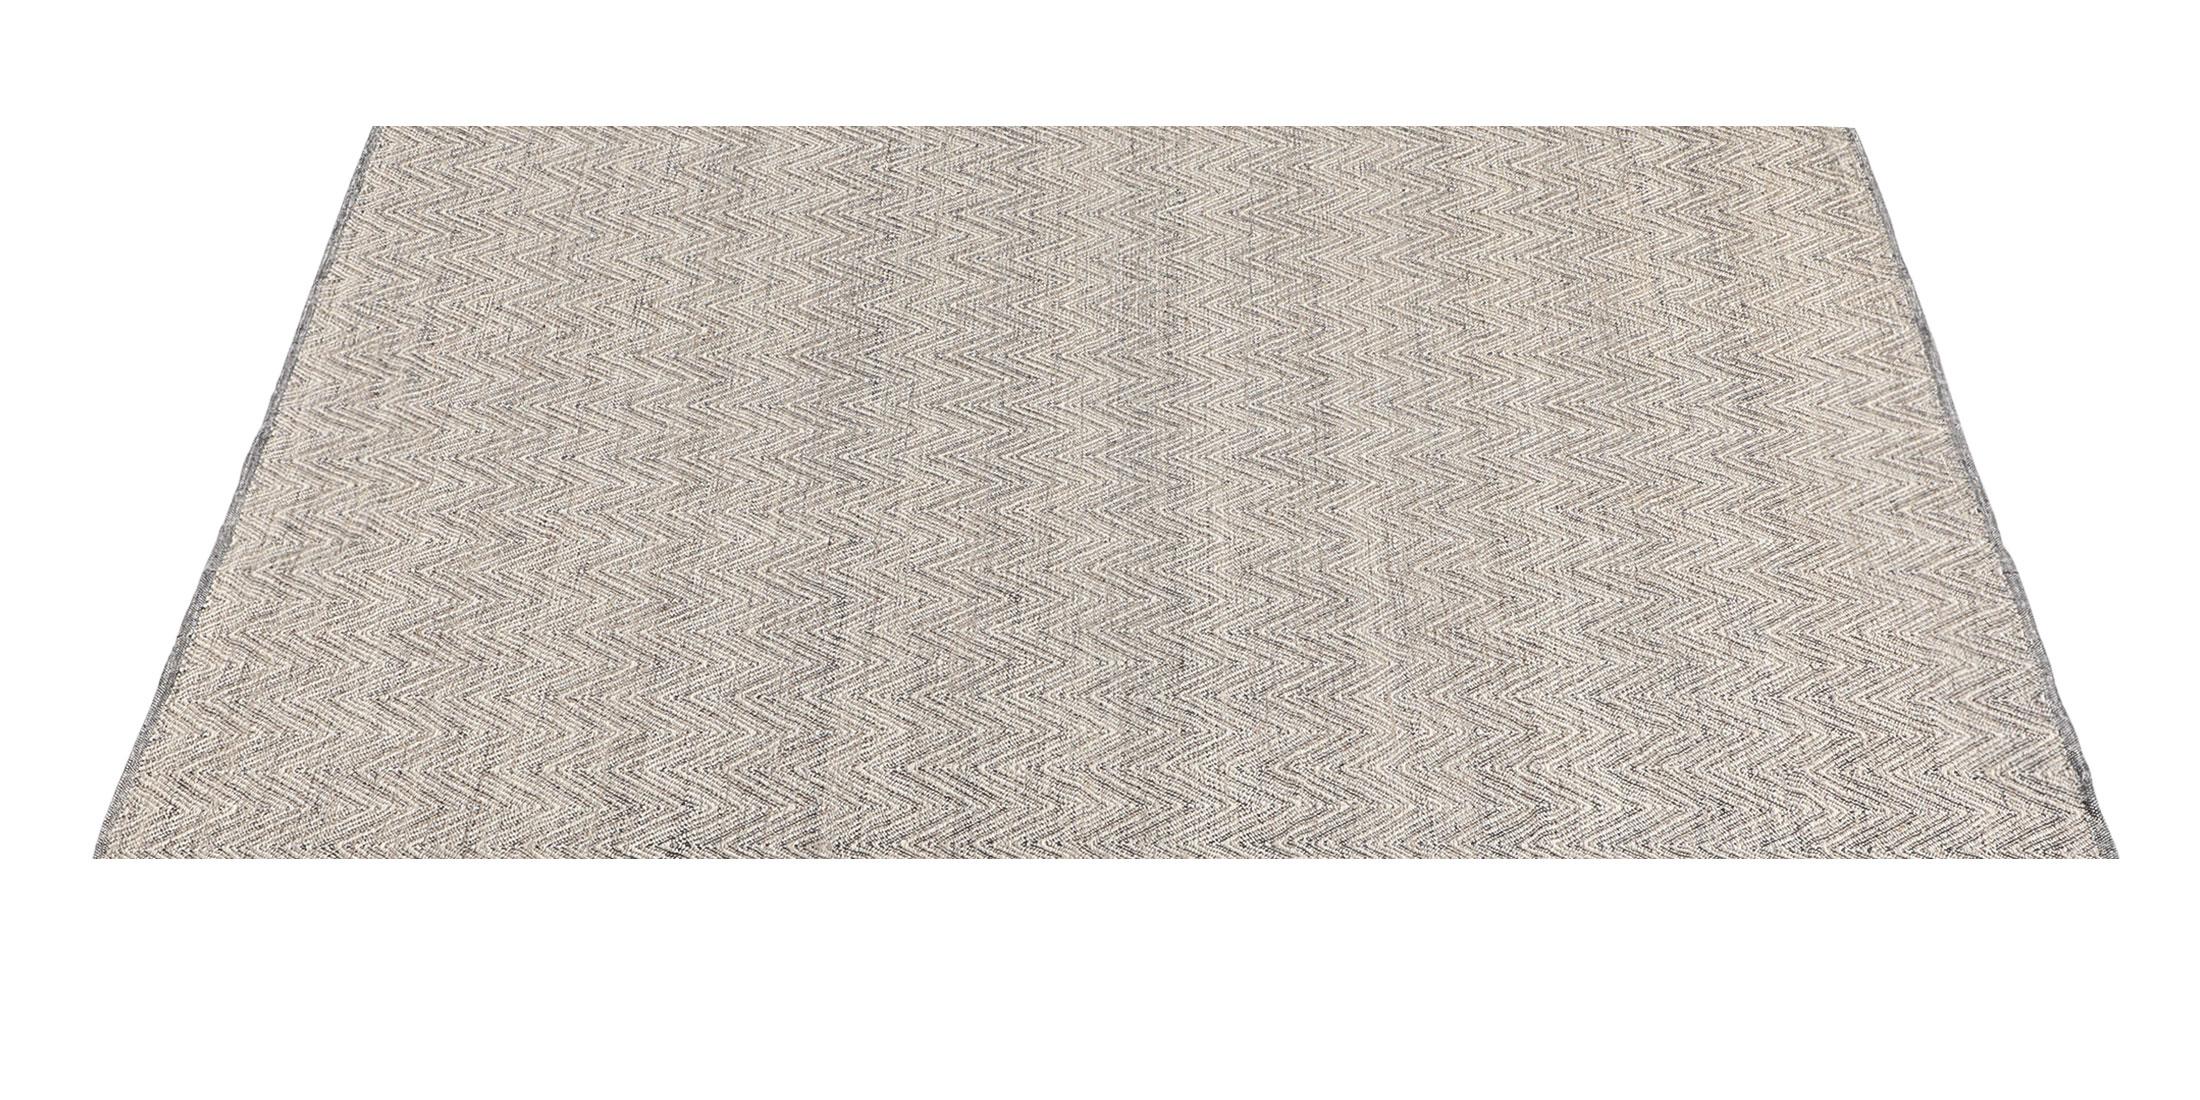 For Sale: Beige (Sand) Ben Soleimani Ceyah Rug– Hand-woven Plush Textured Wool + Linen Charcoal 9'x12' 2